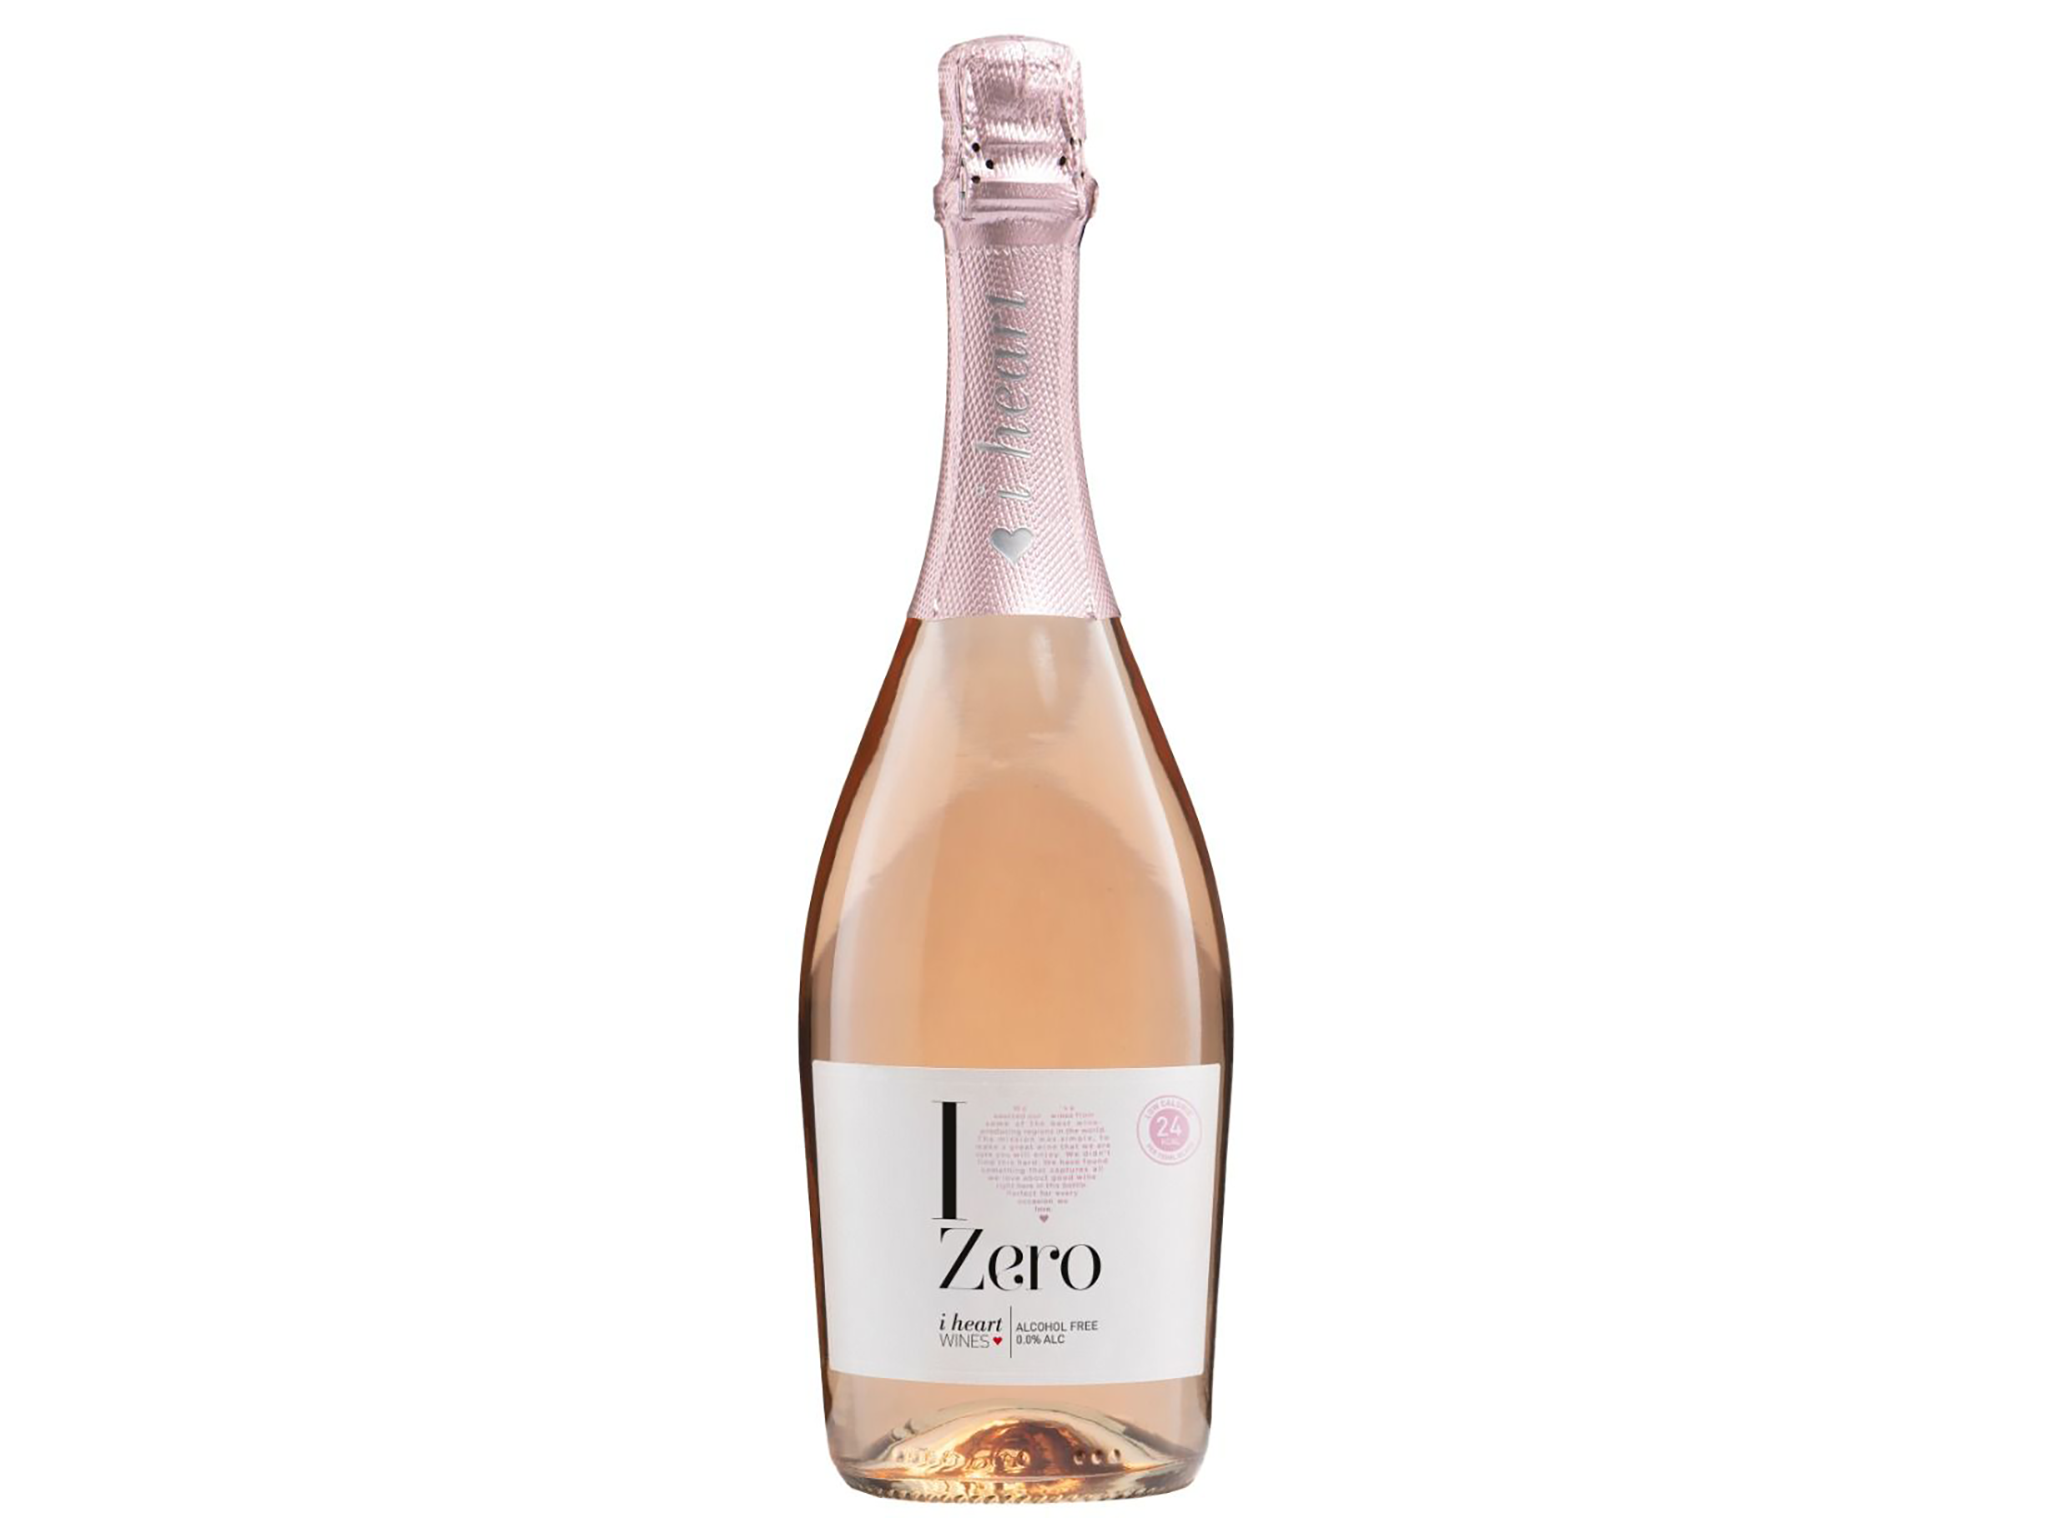 iHeart Zero sparkling rosé